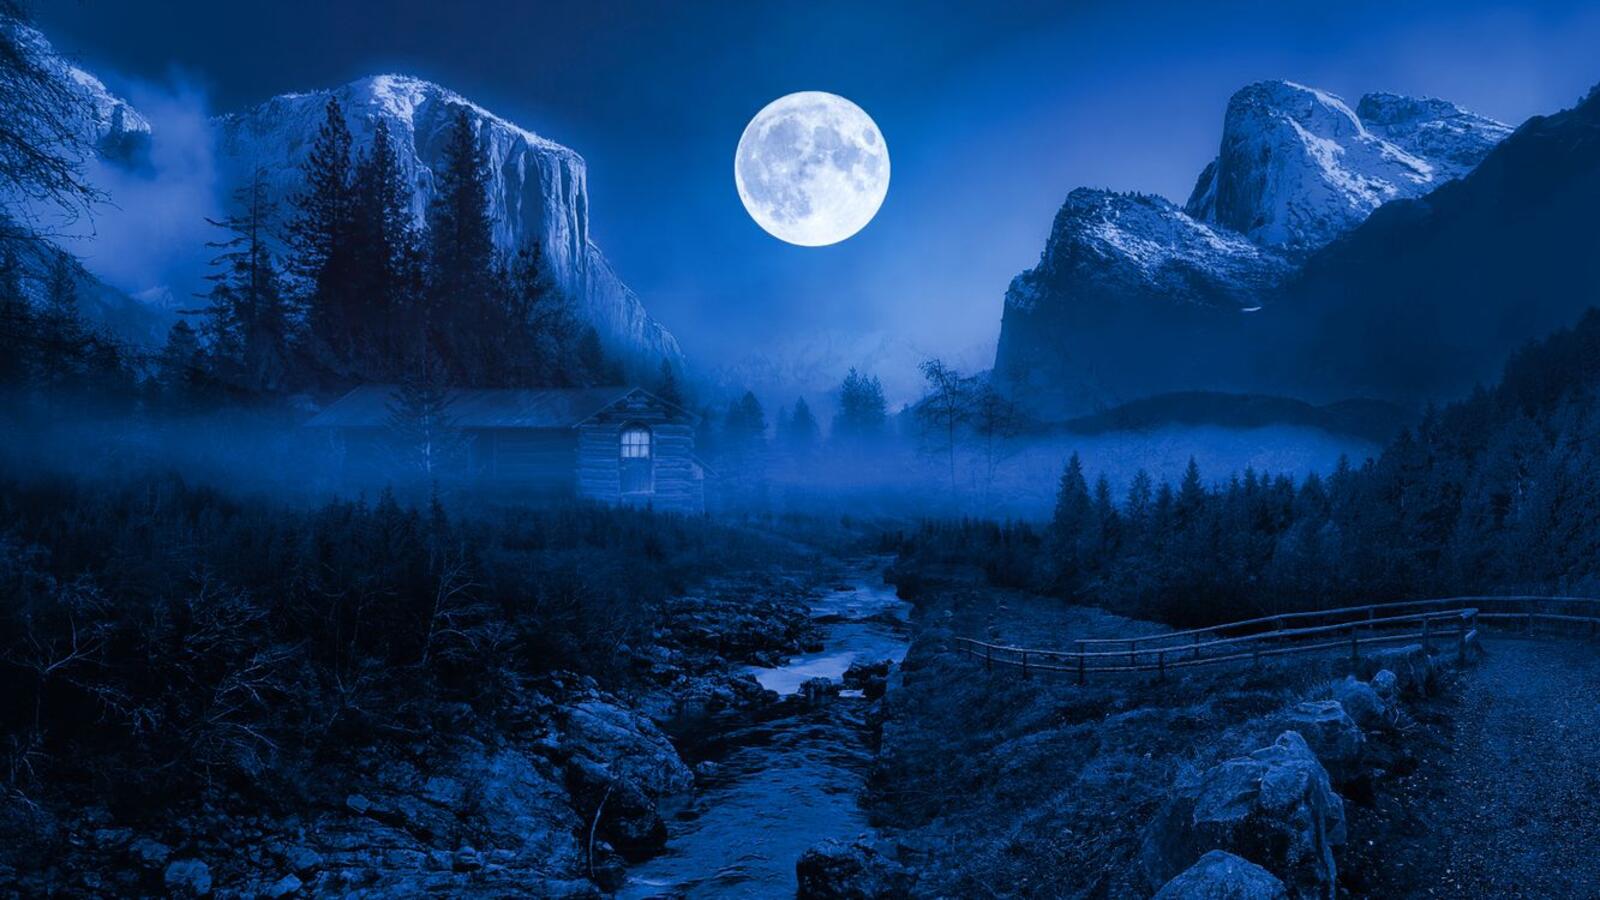 Wallpapers moonlight river landscape on the desktop